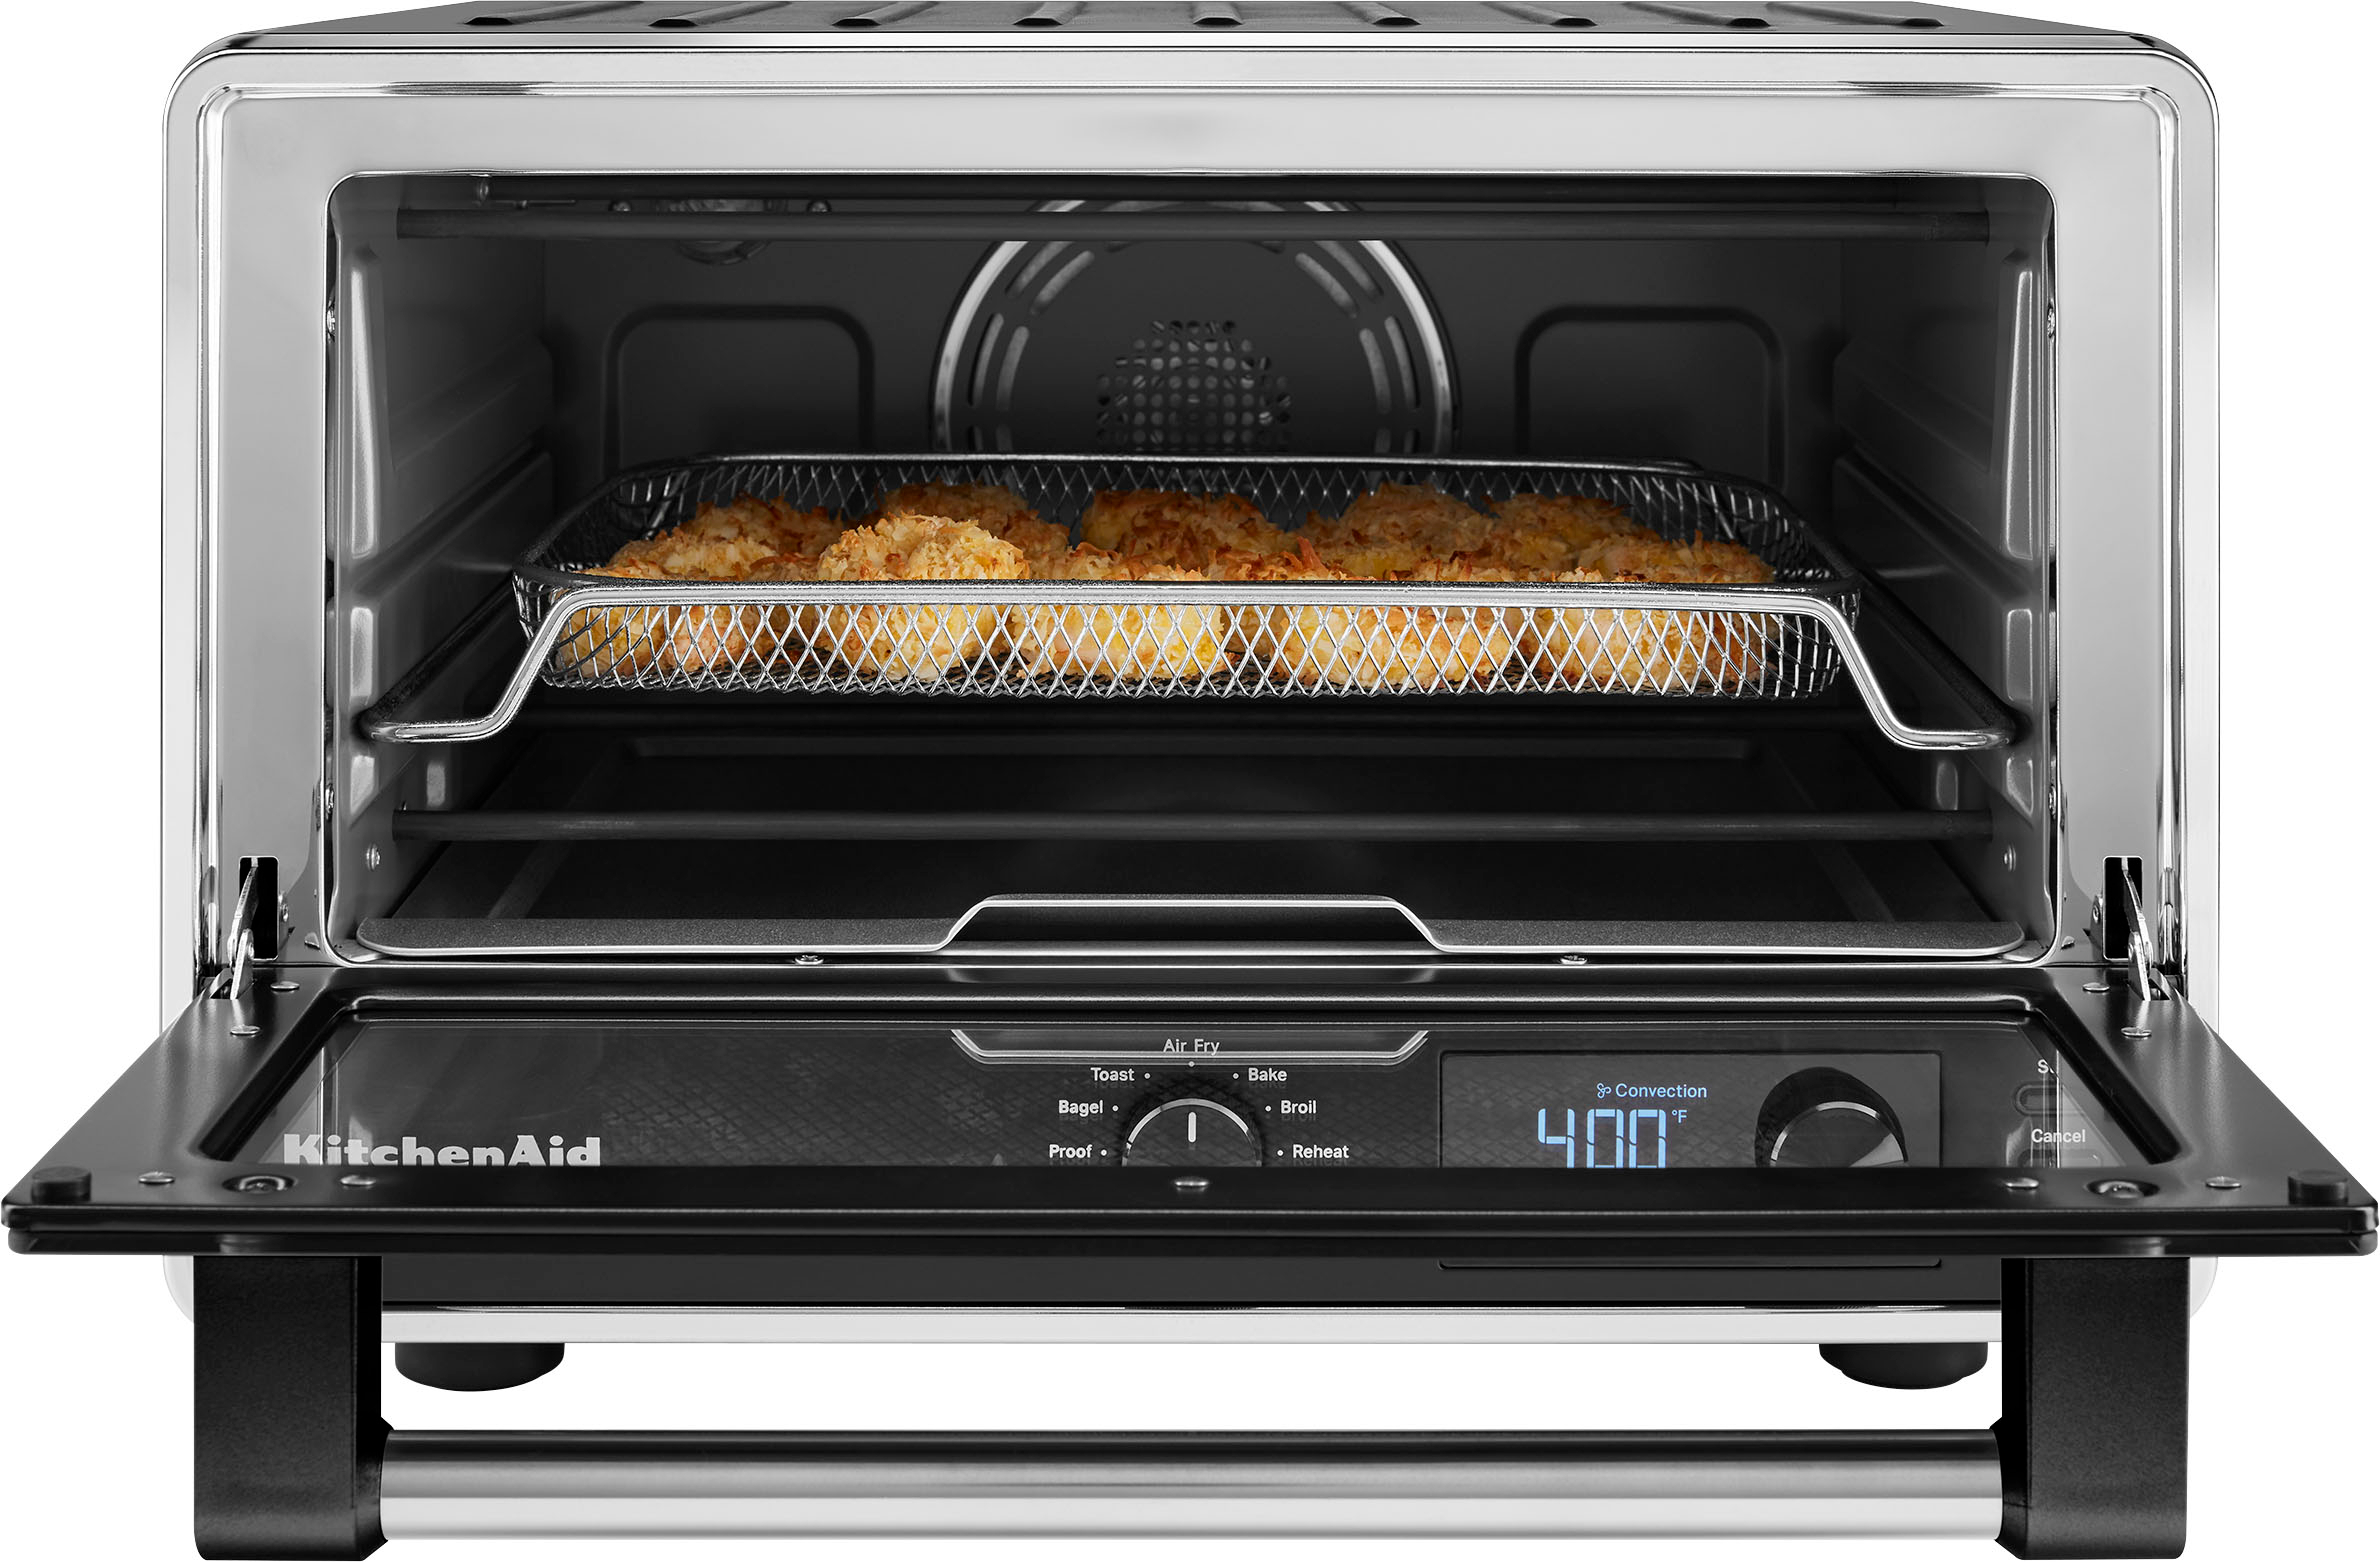 KitchenAid - Digital Countertop Oven - Black Matte